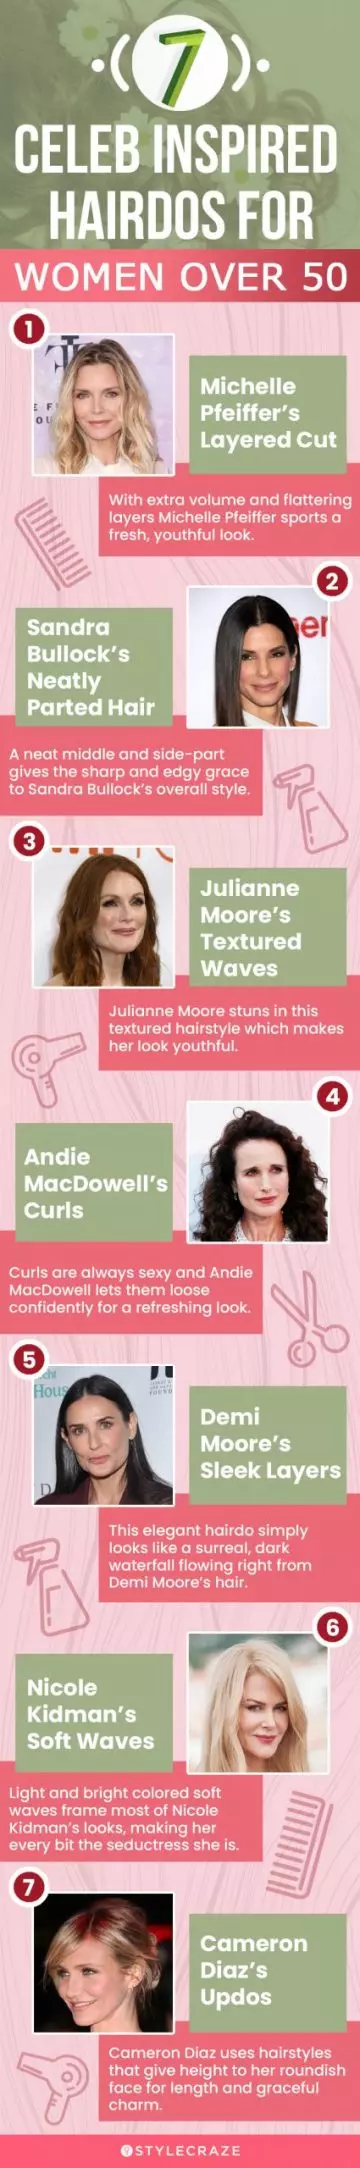 7 celeb inspired hairdos for women over 50 (infographic)